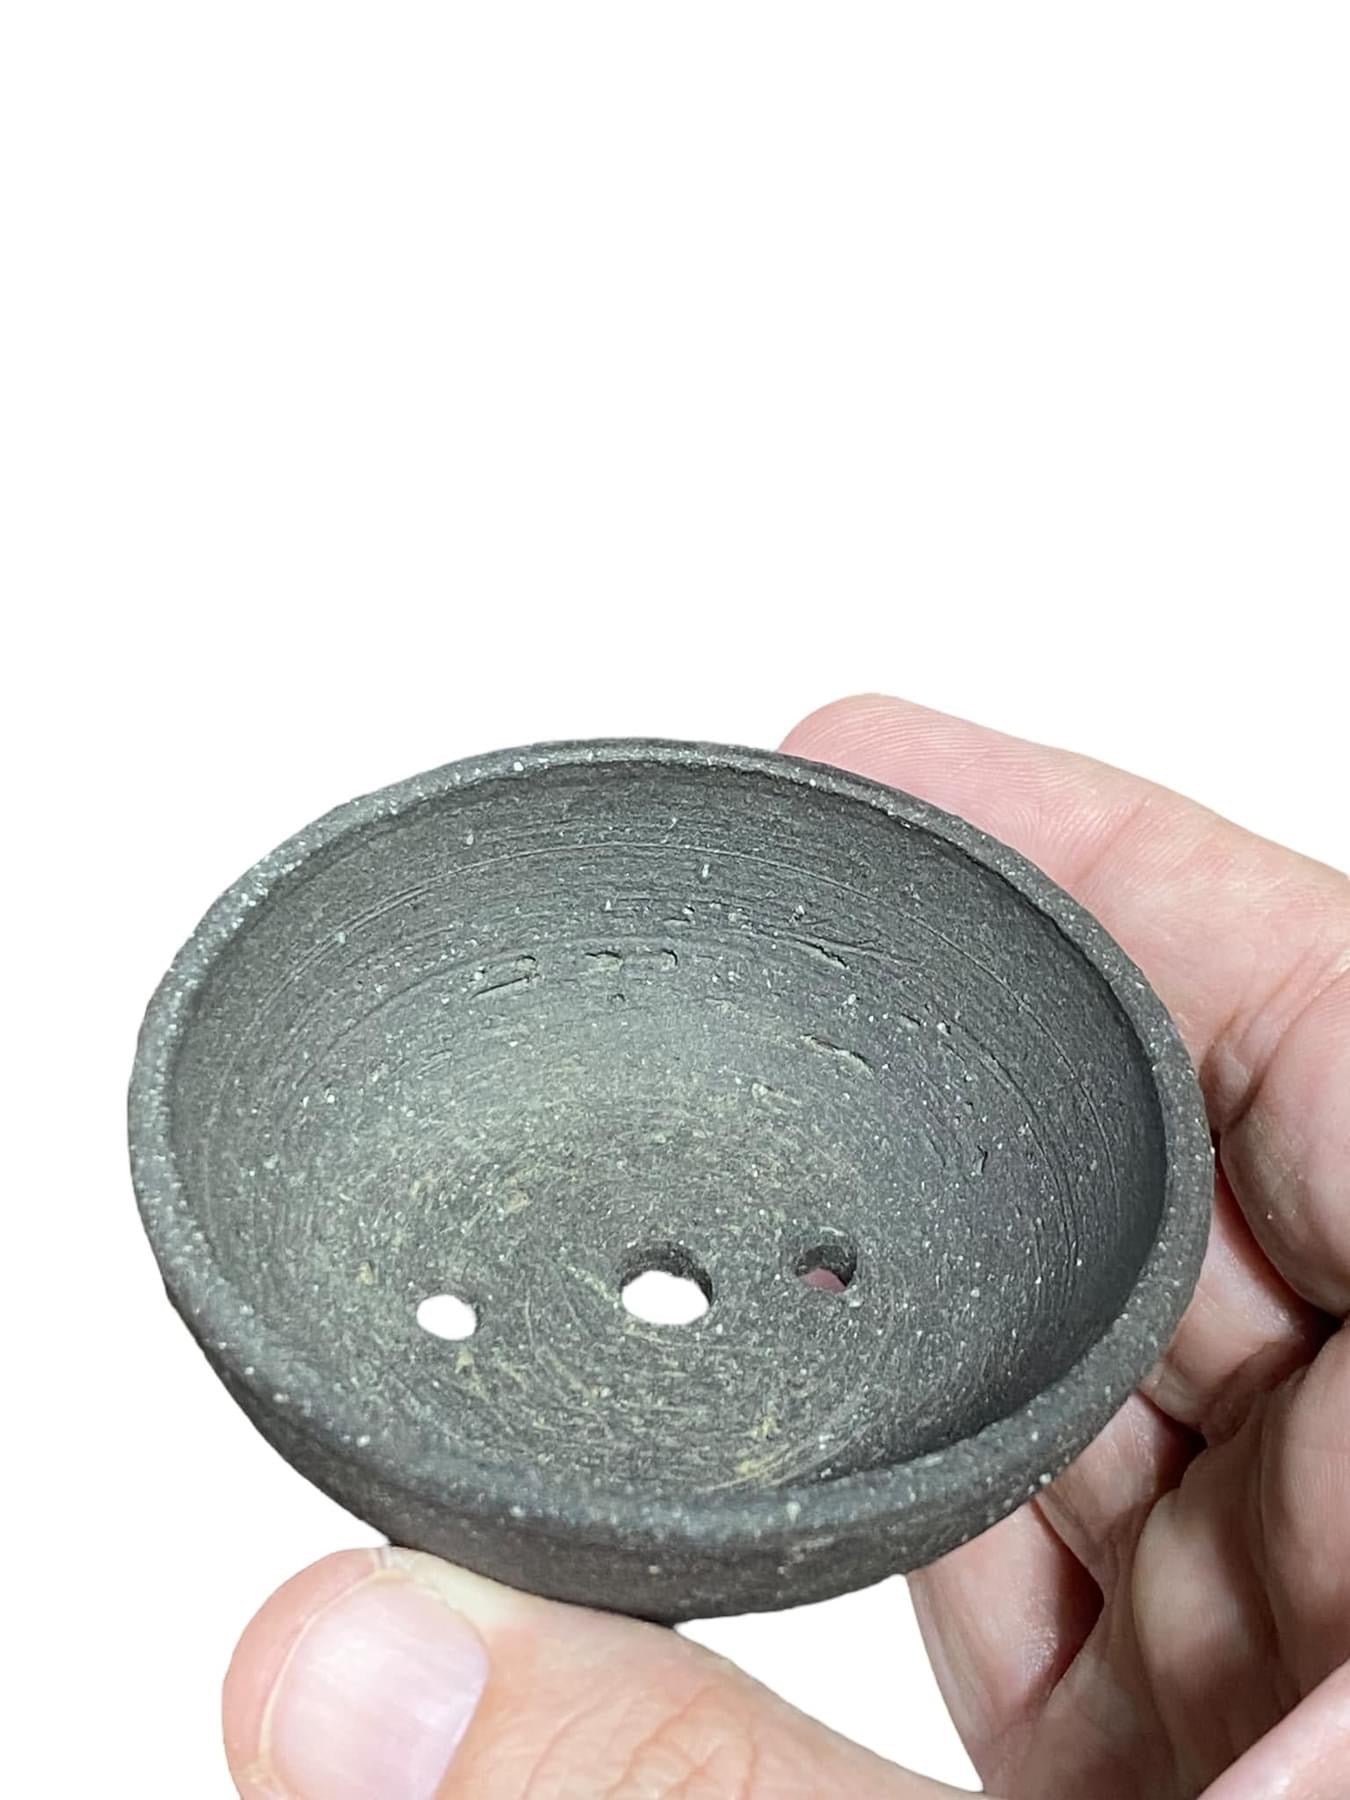 Heian Kosen - Unglazed Round Bonsai or Accent Pot (3-1/8" wide)